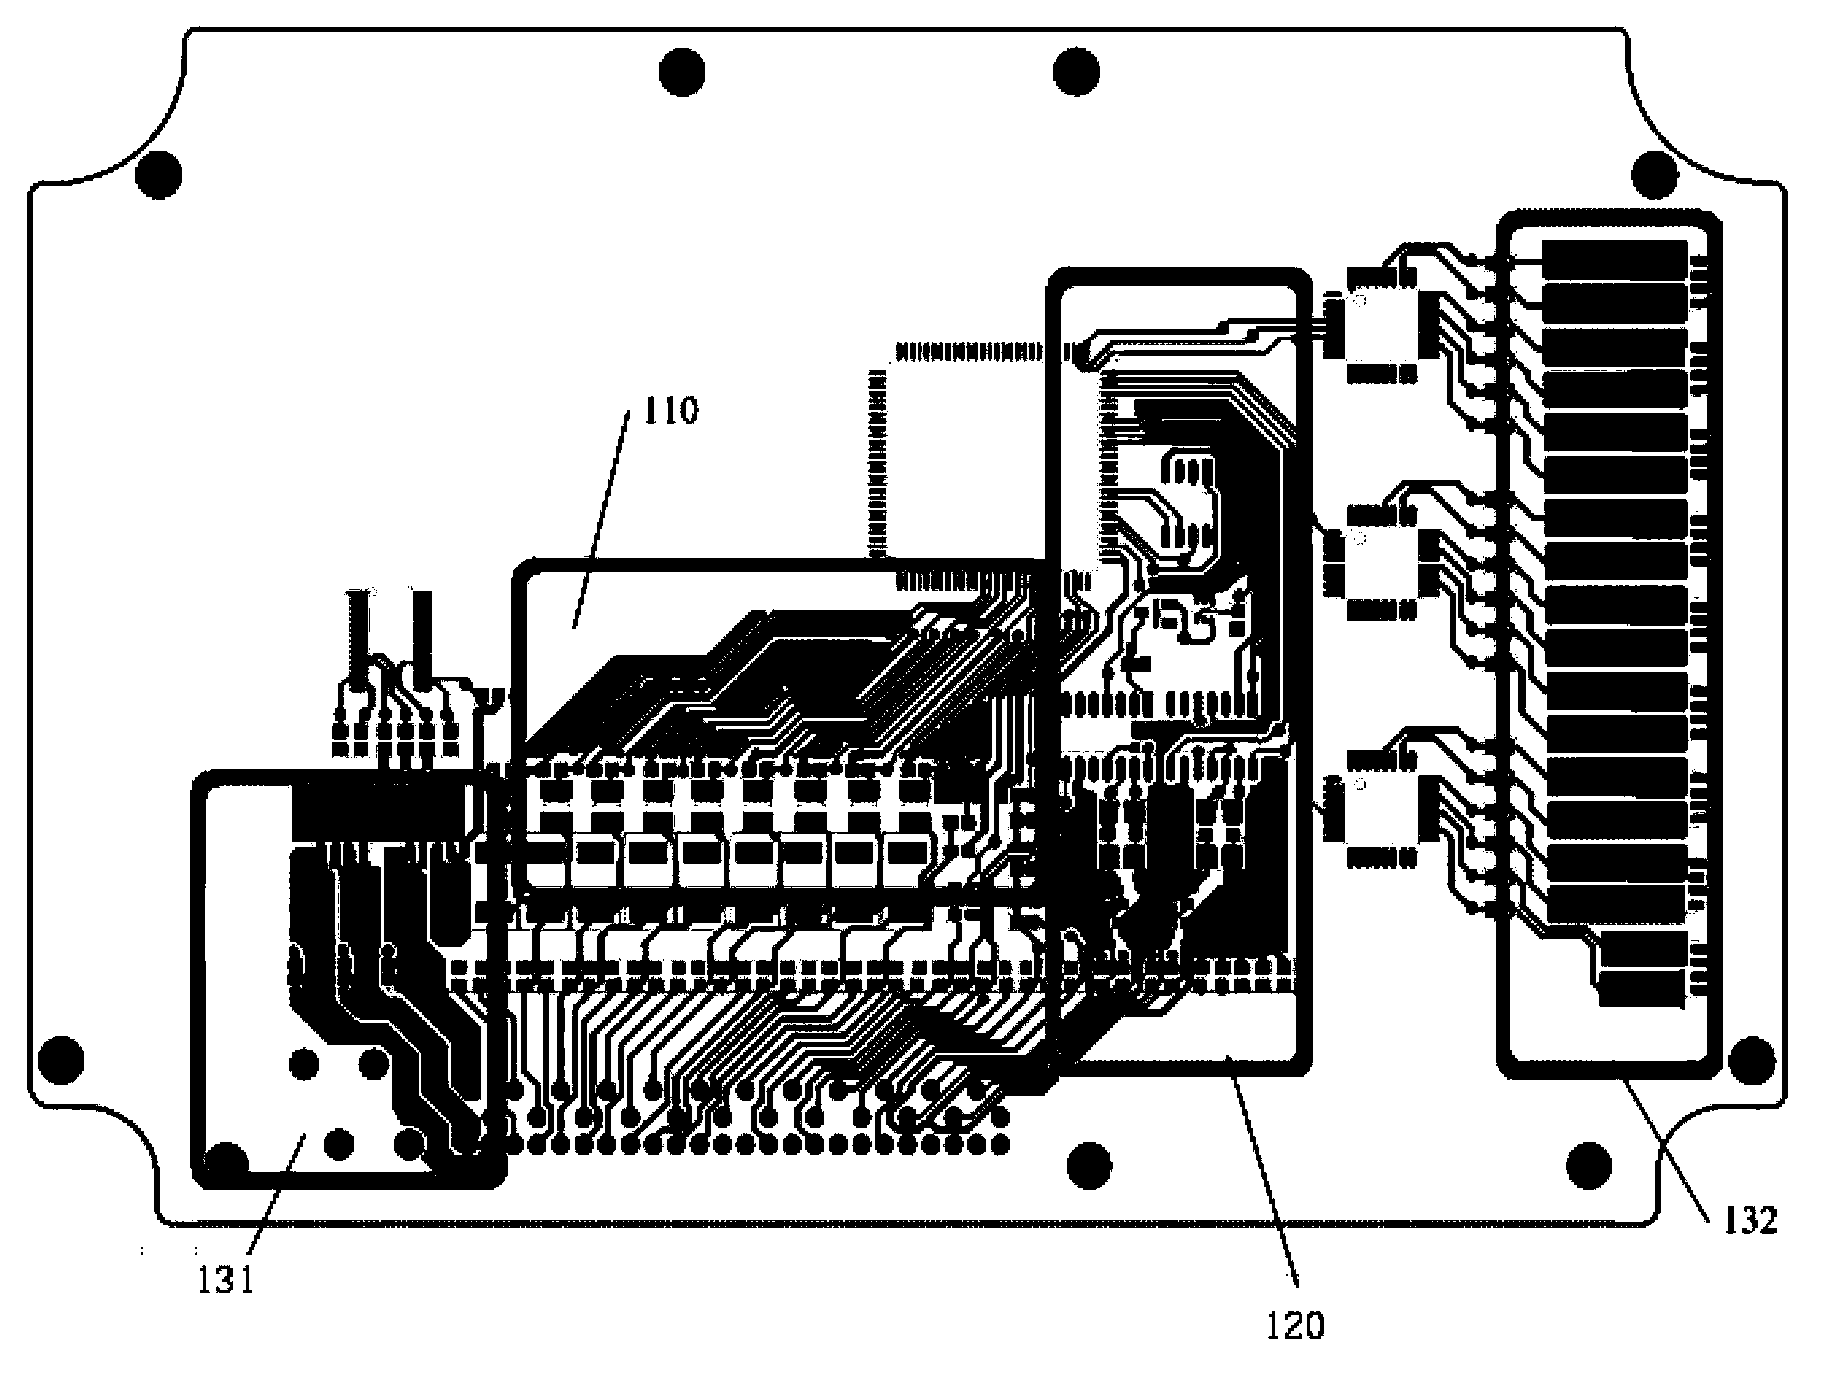 Printed circuit board and electric car